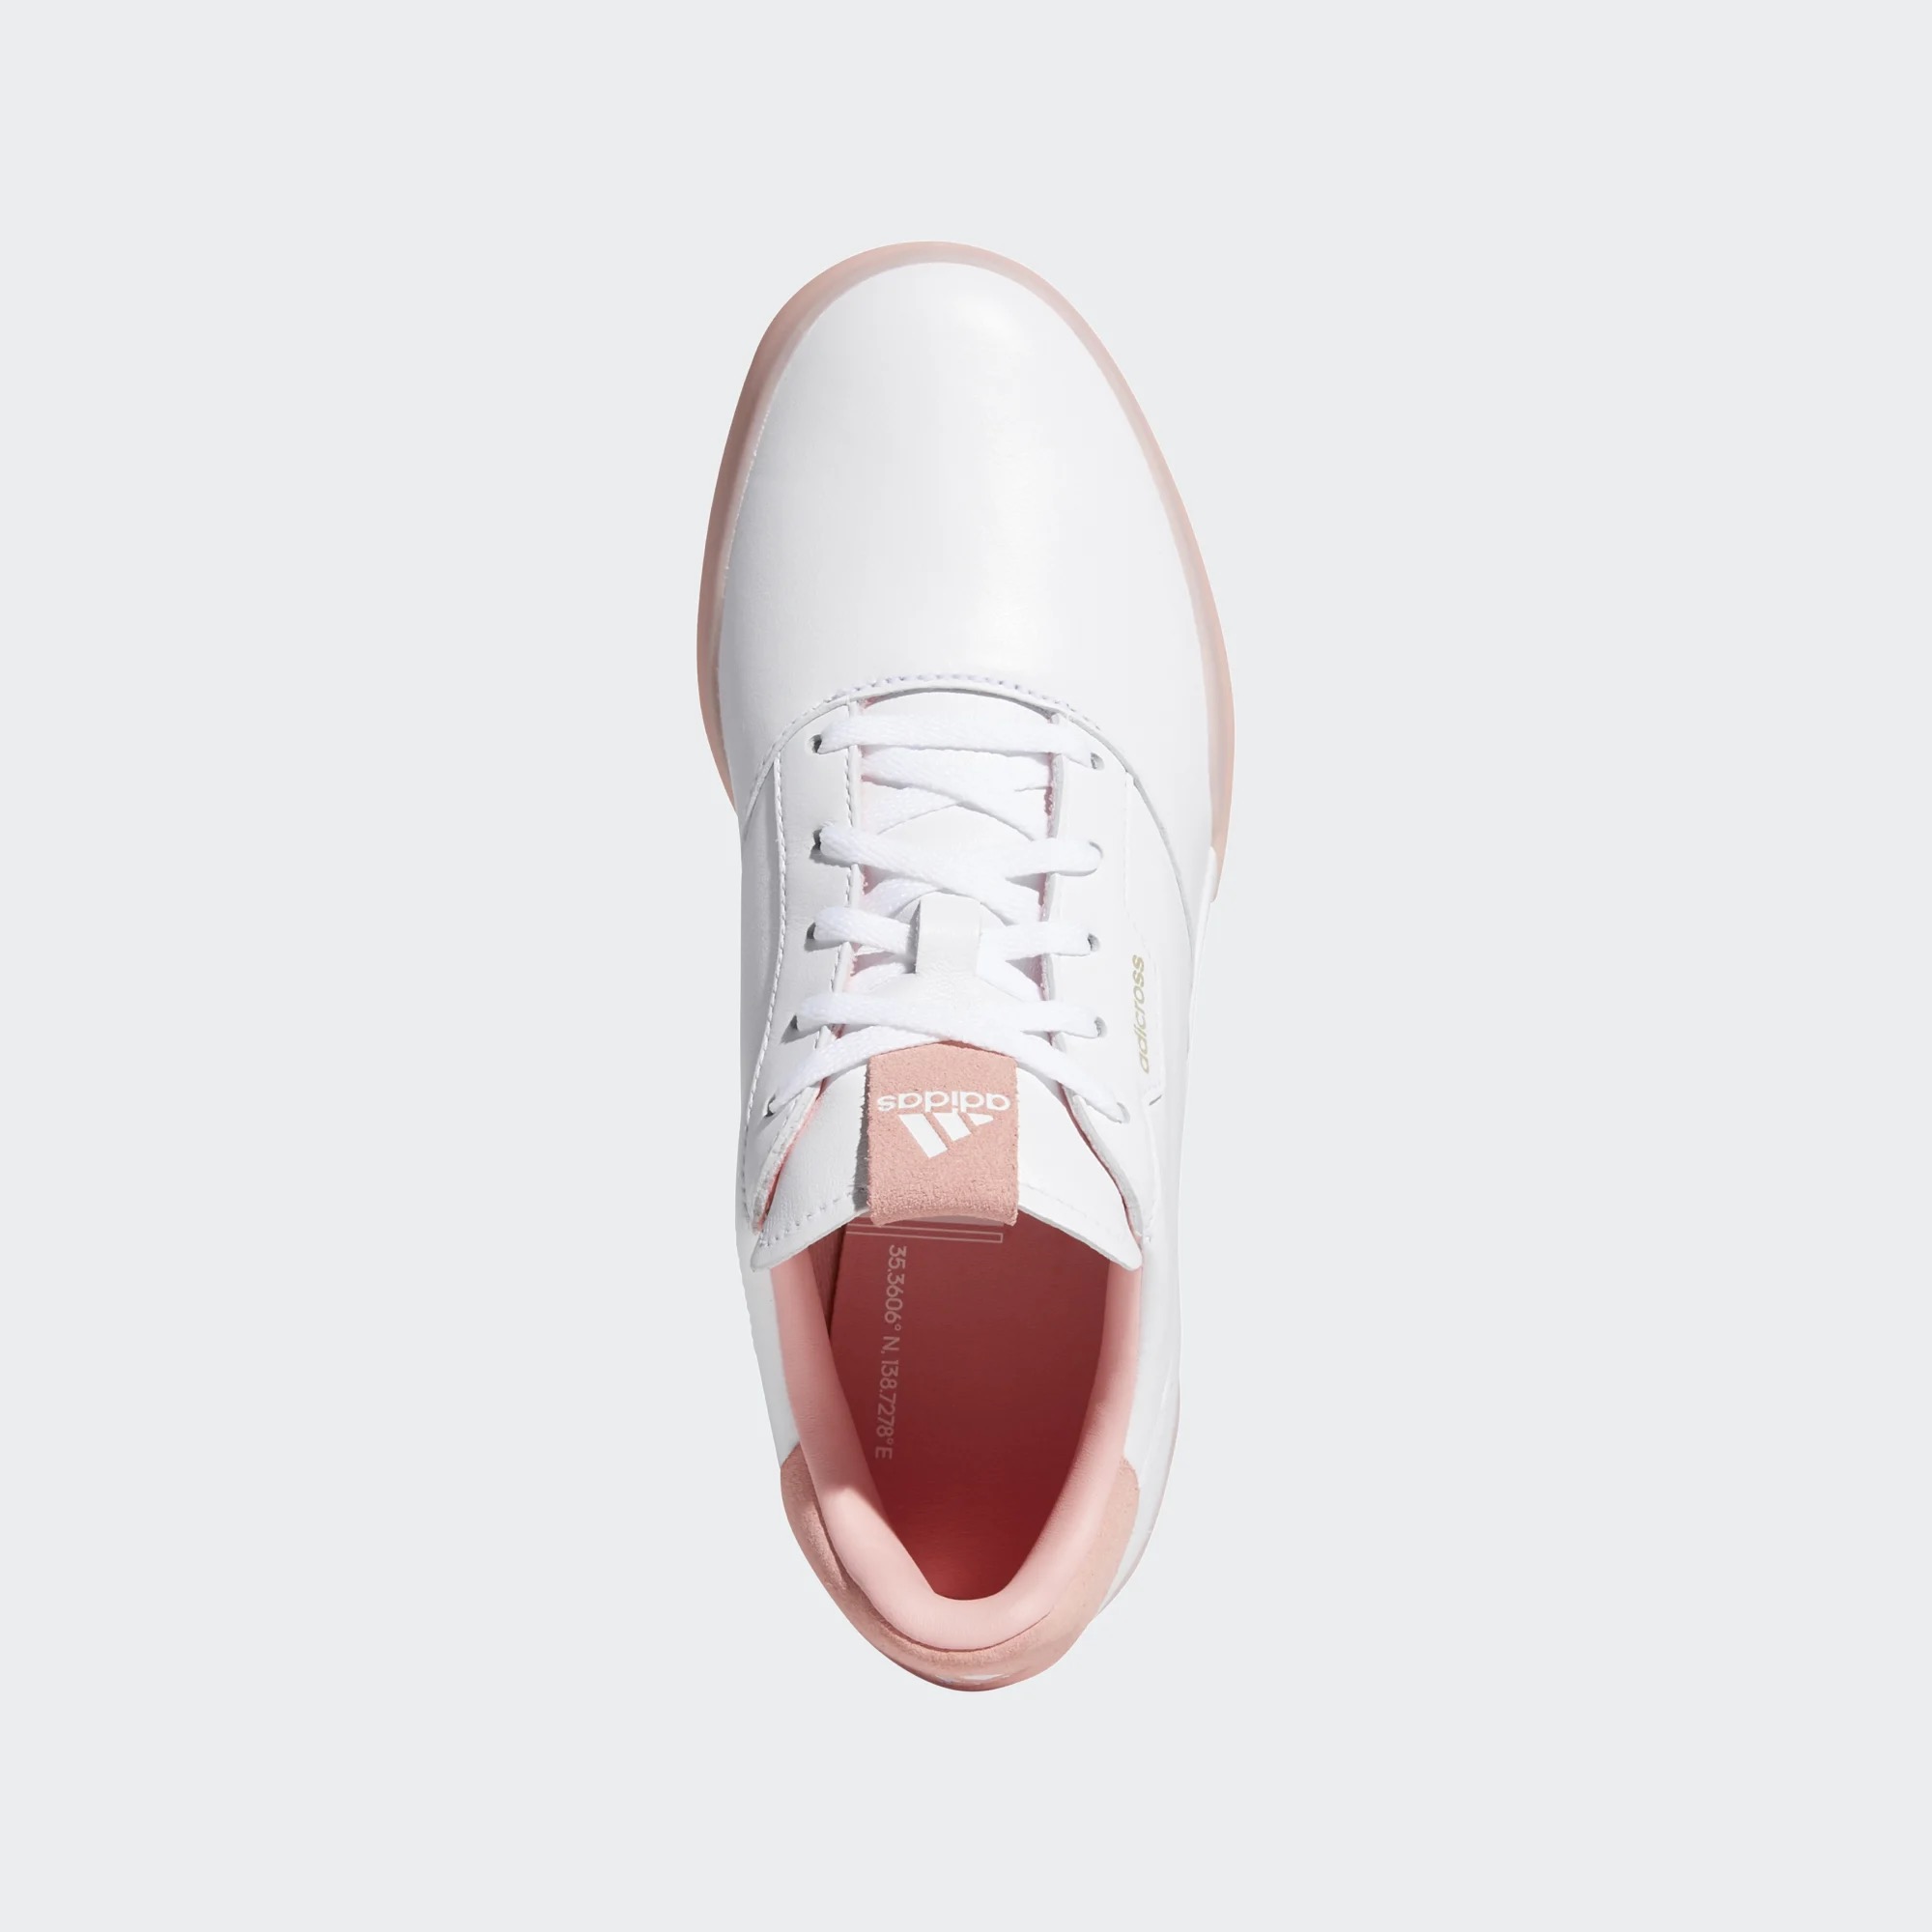 Adidas Adicross Retro White/Pink Damen